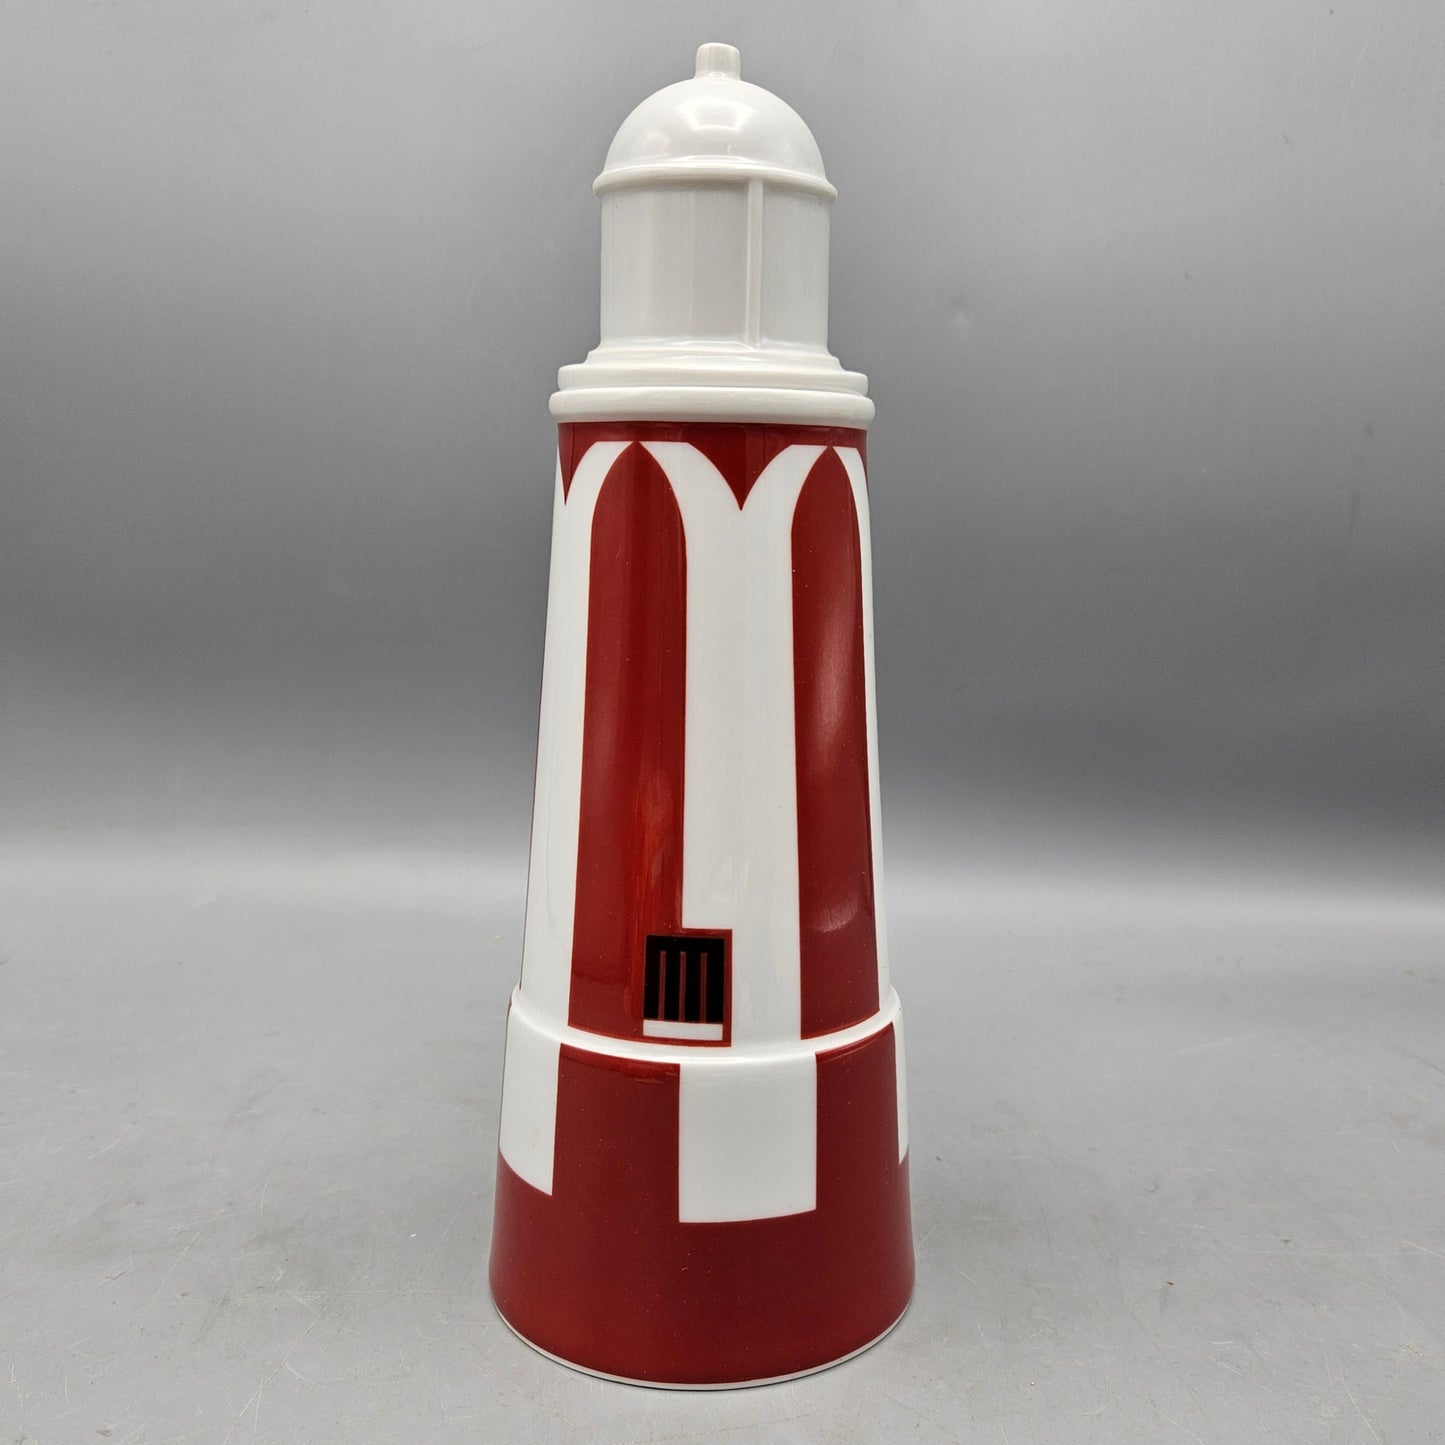 Aldo Rossi for Rosenthal Il Faro Torre Hornby Lighthouse